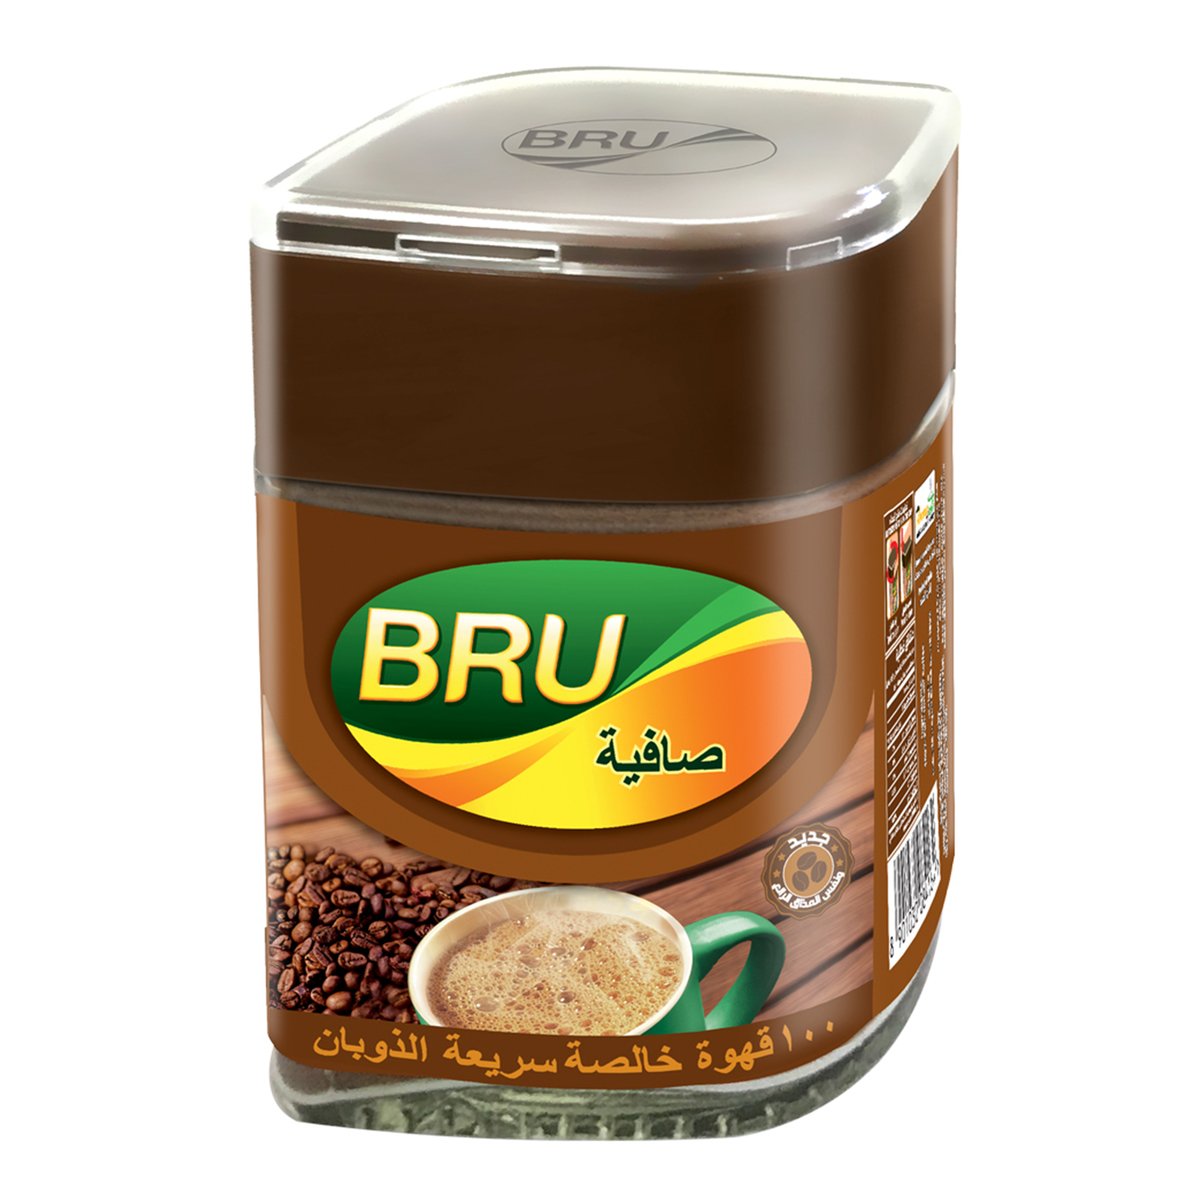 Bru Pure Instant Coffee 50 g